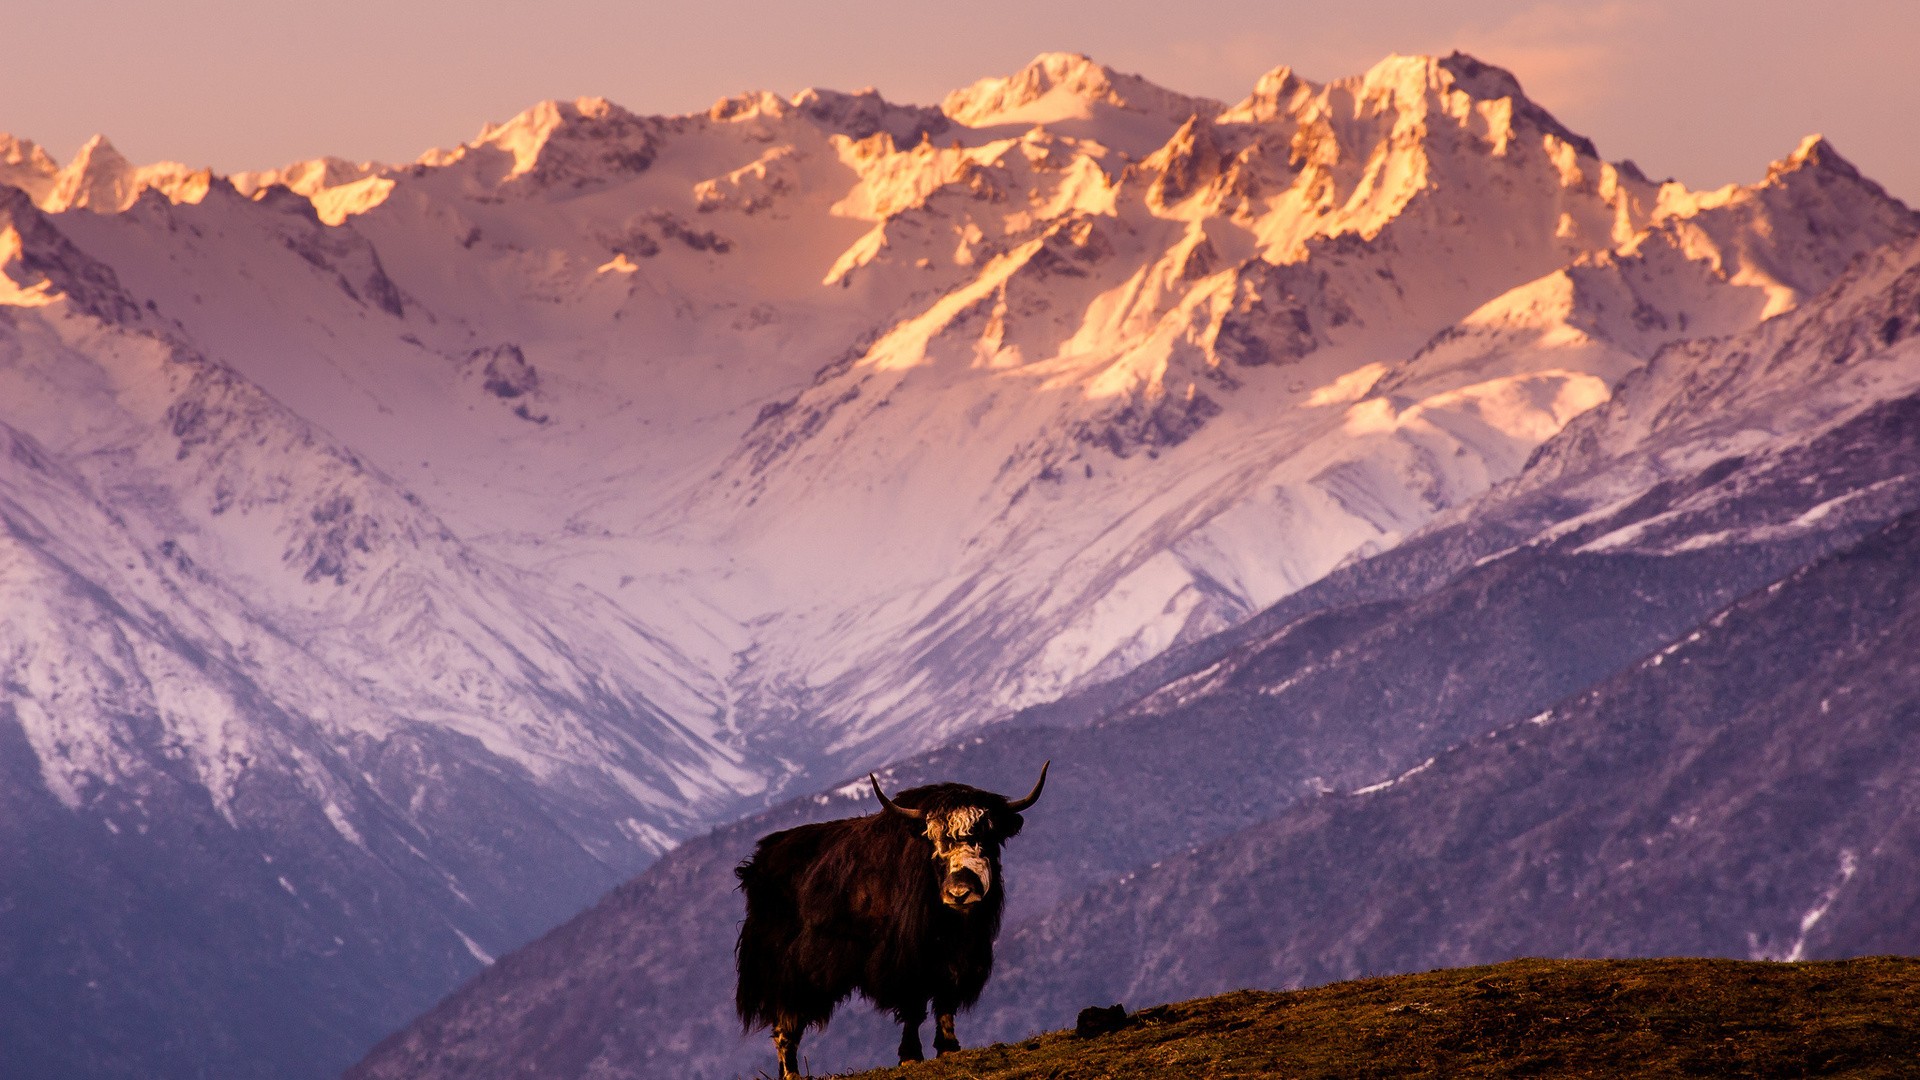 General 1920x1080 nature animals landscape yaks Himalayas Tibet hills mountains snow snowy peak sunlight Asia mammals